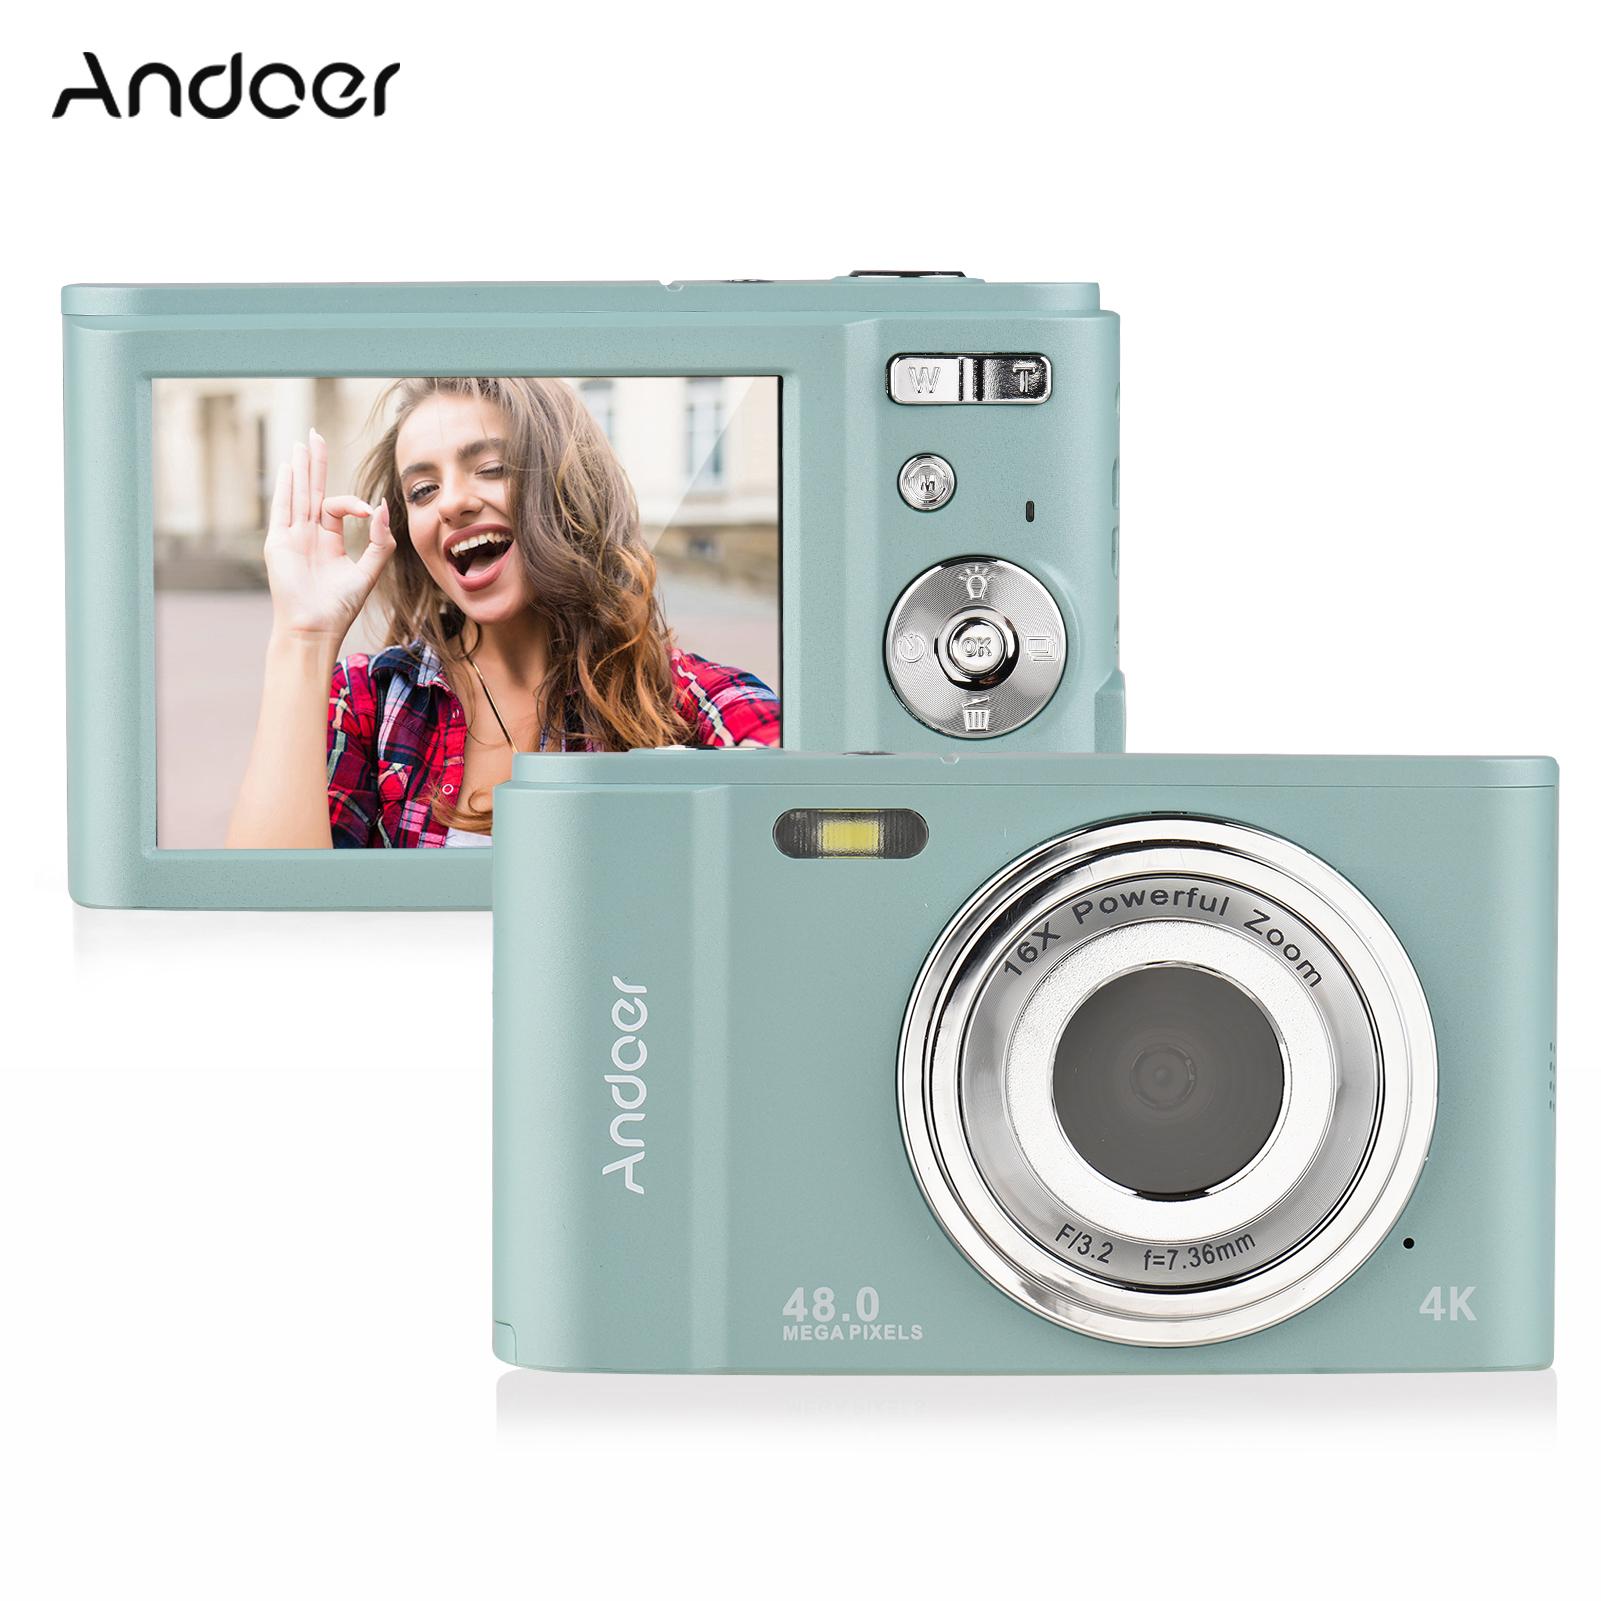 Andoer Portable Digital Camera 48MP 4K 2.88-inch IPS Screen 16X Zoom Auto Focus Self-Timer Face